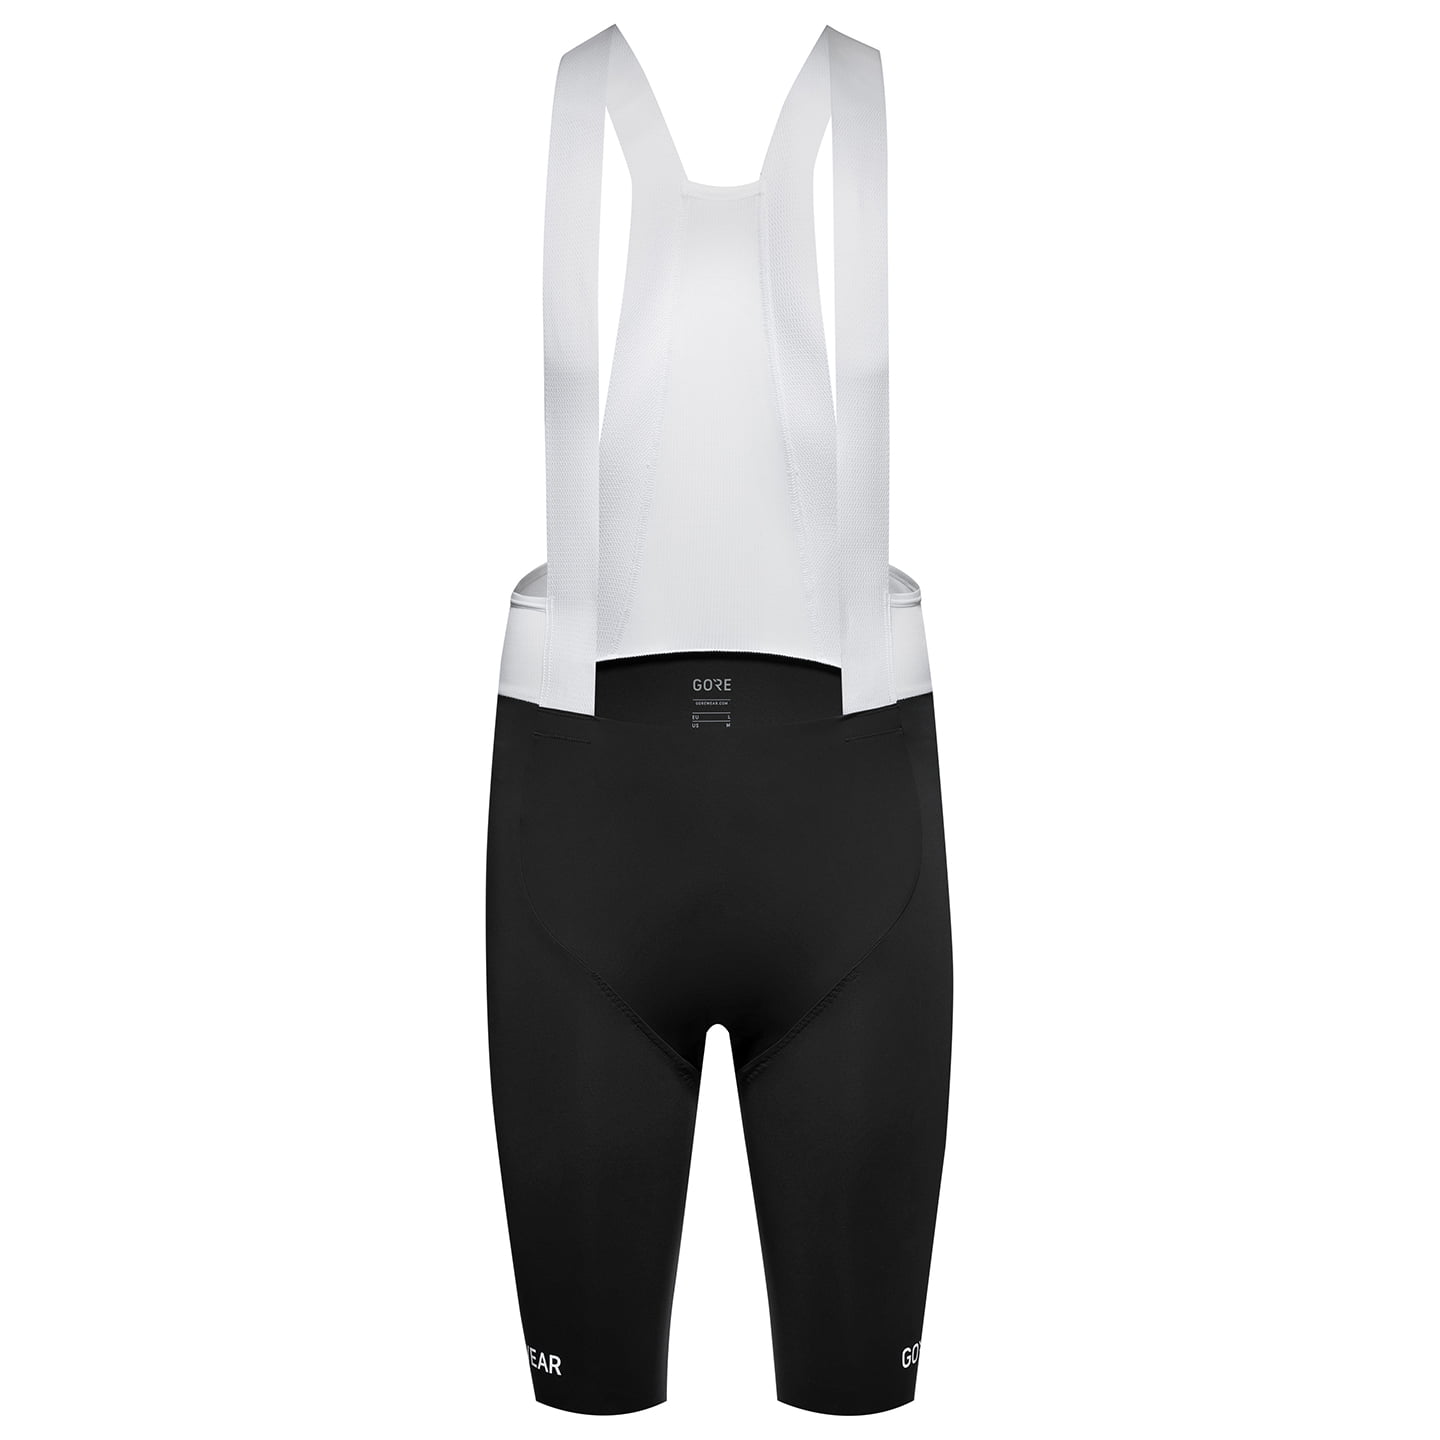 Spinshift Bib Shorts Bib Shorts, for men, size 3XL, Cycle trousers, Cycle gear